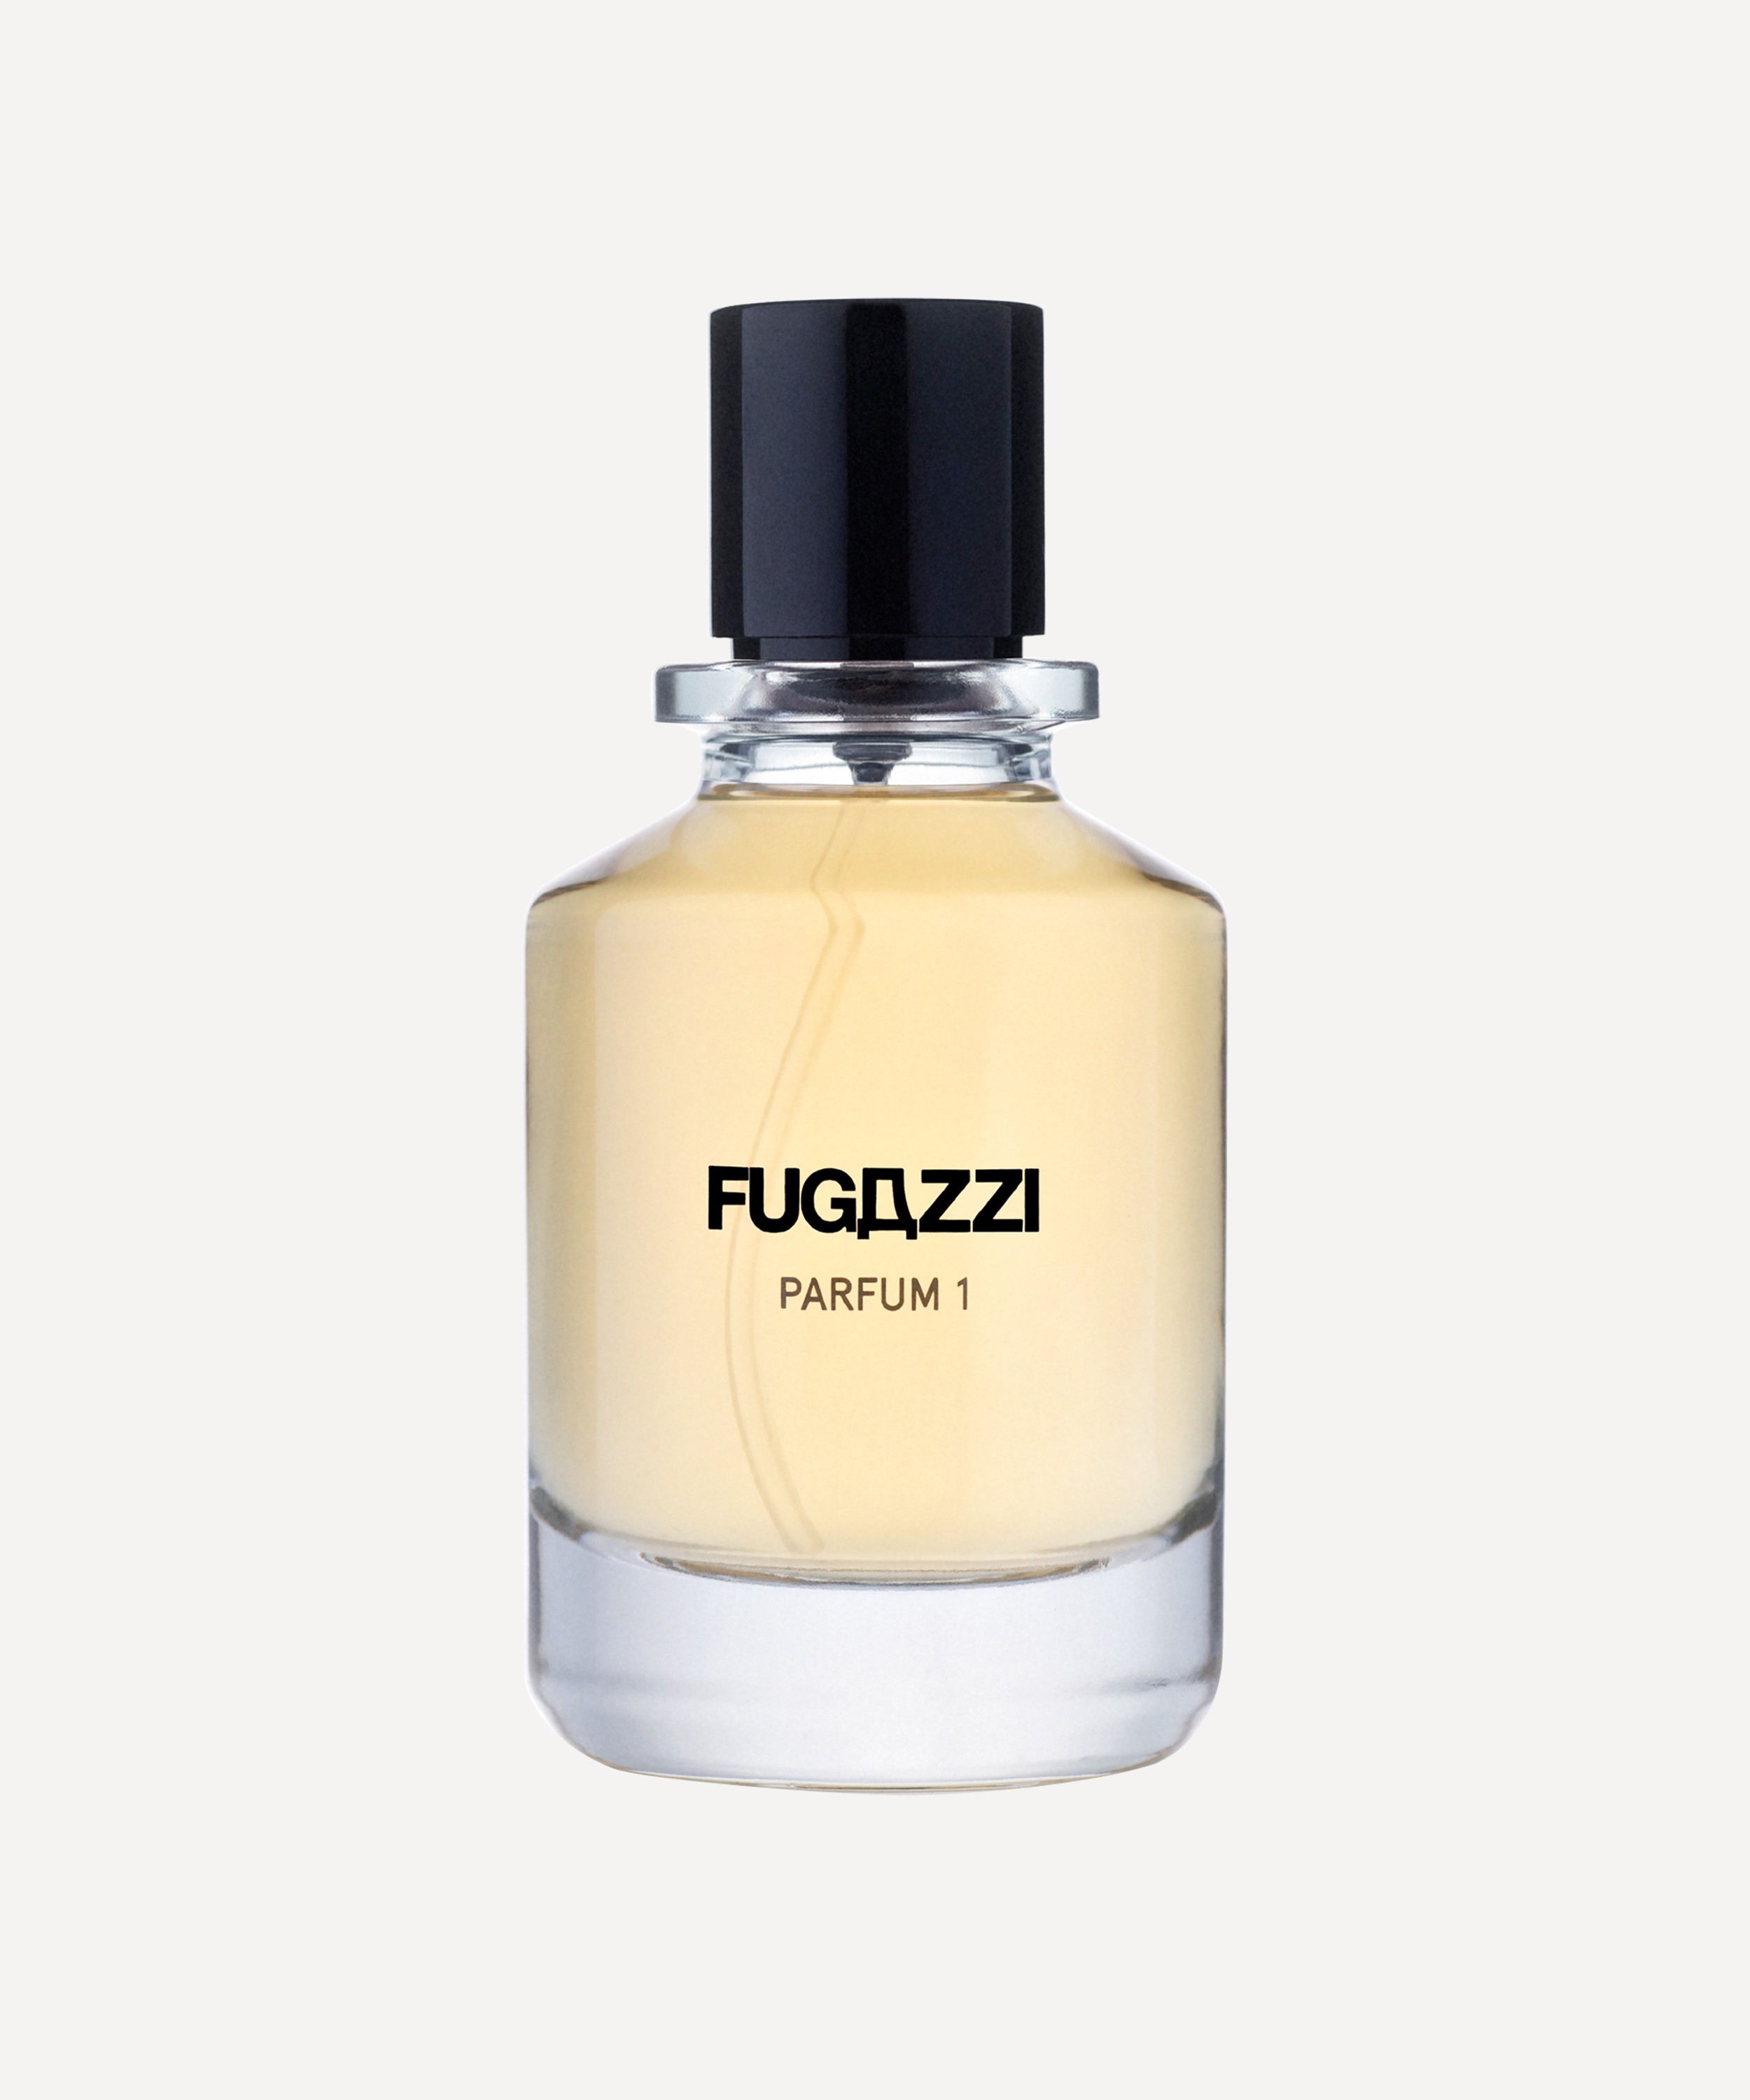 Fugazzi - Parfum 1 Eau de Parfum 100ml